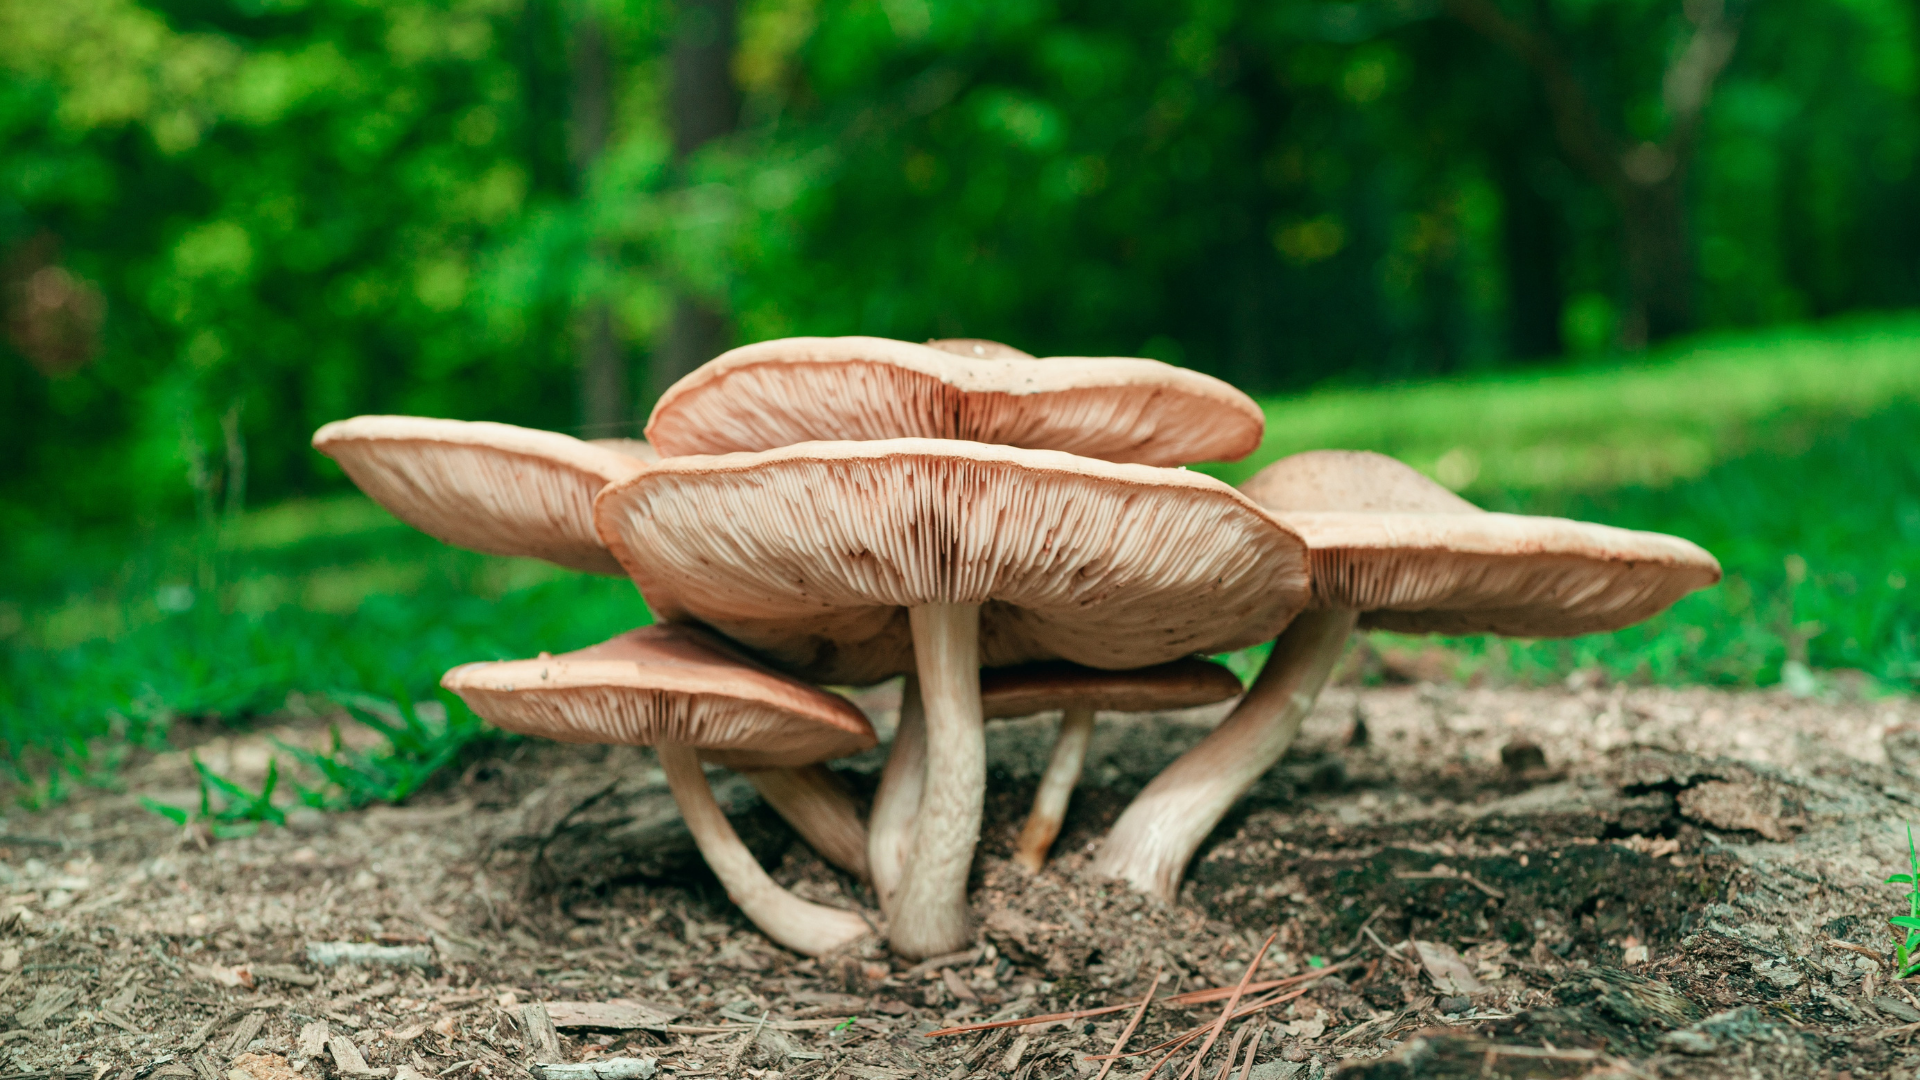 Mushroom hunting in Michigan? Beware dozens of poisonous species